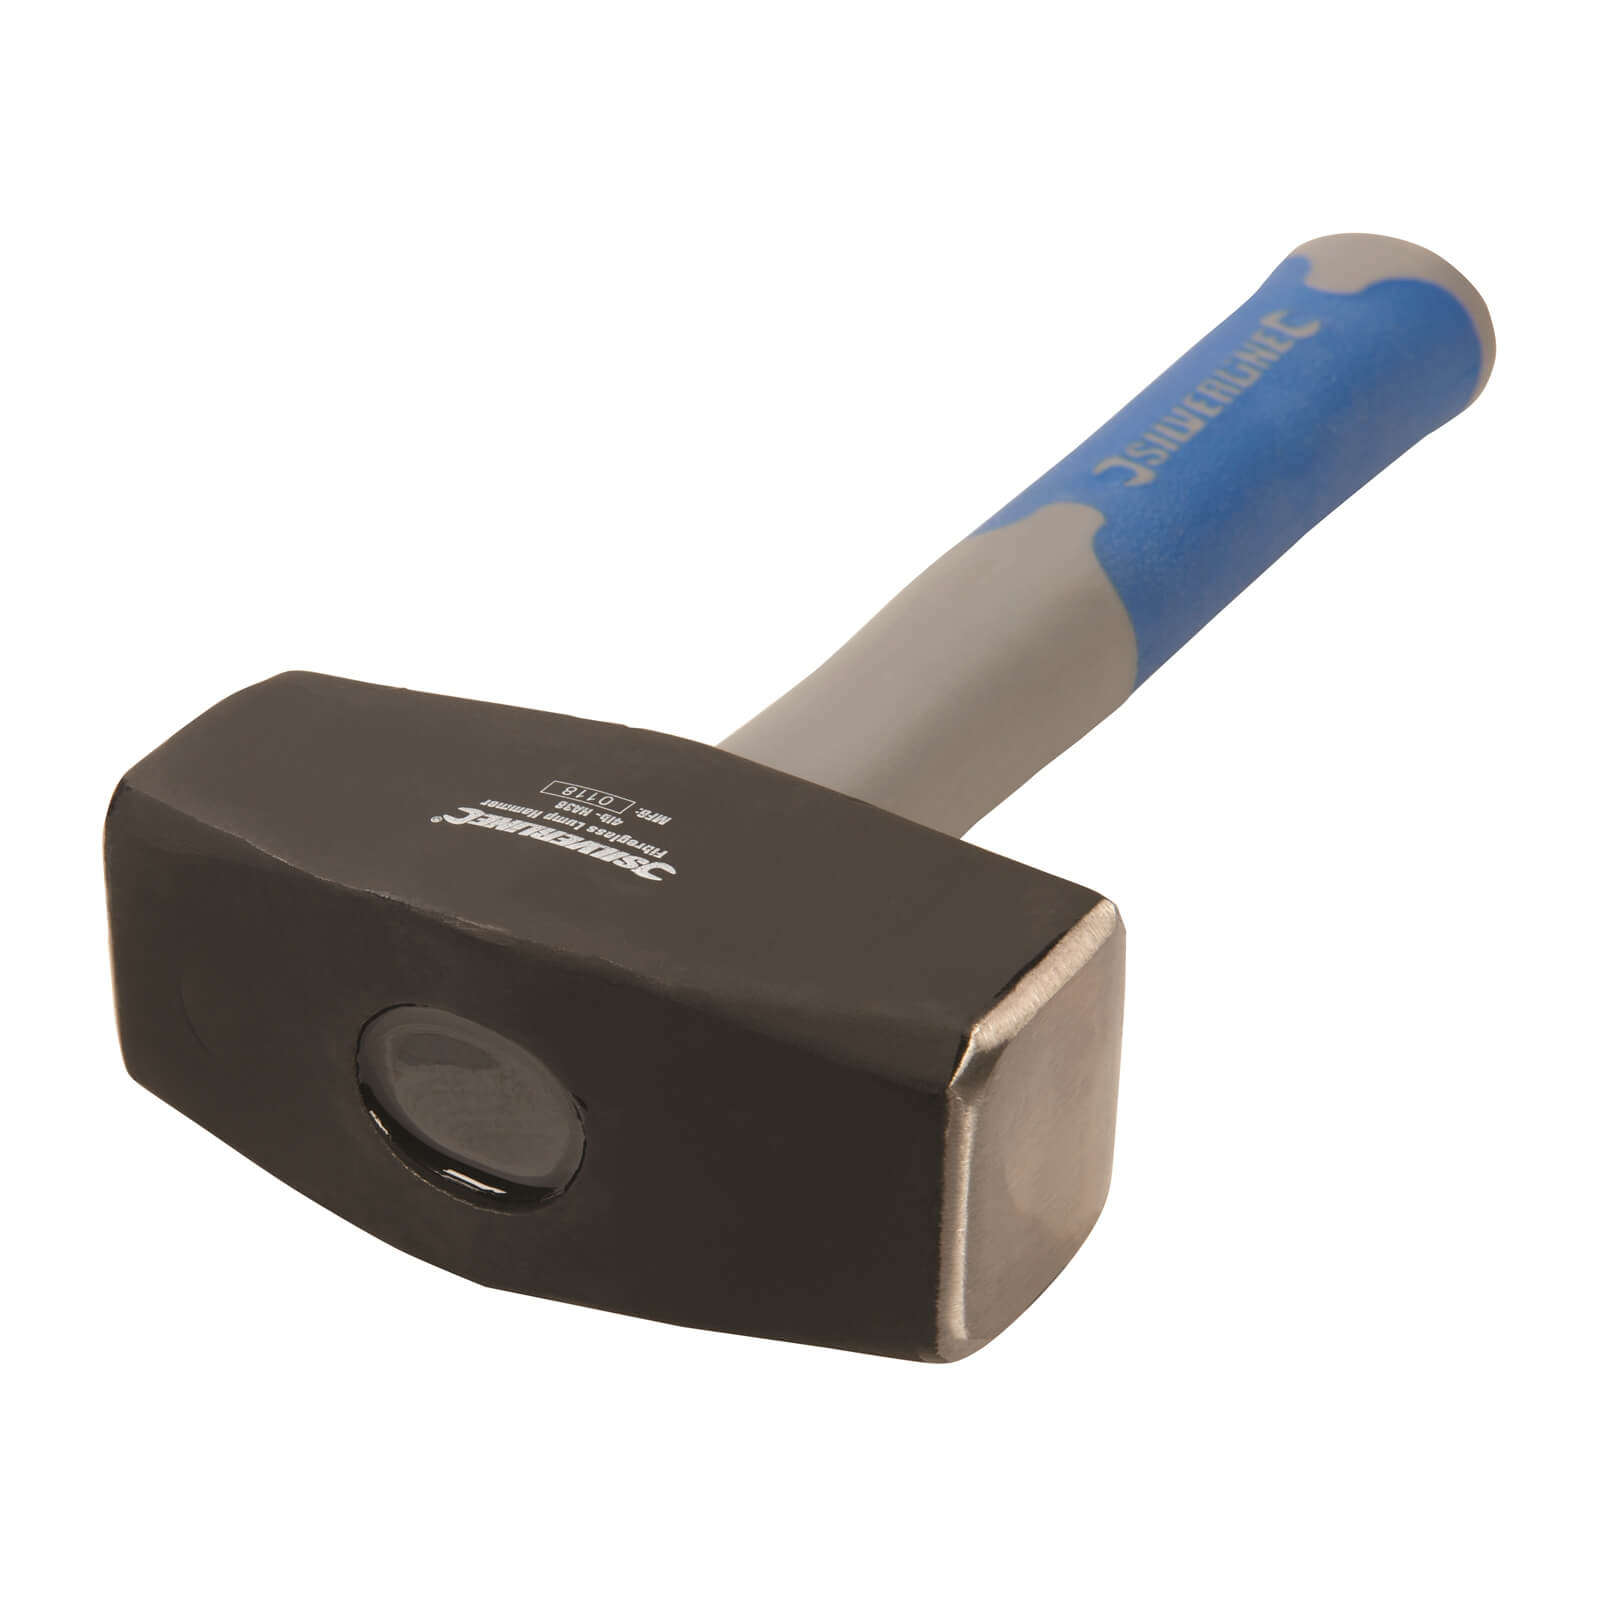 Silverline Fibreglass Lump Hammer - 4lb (1.81kg)